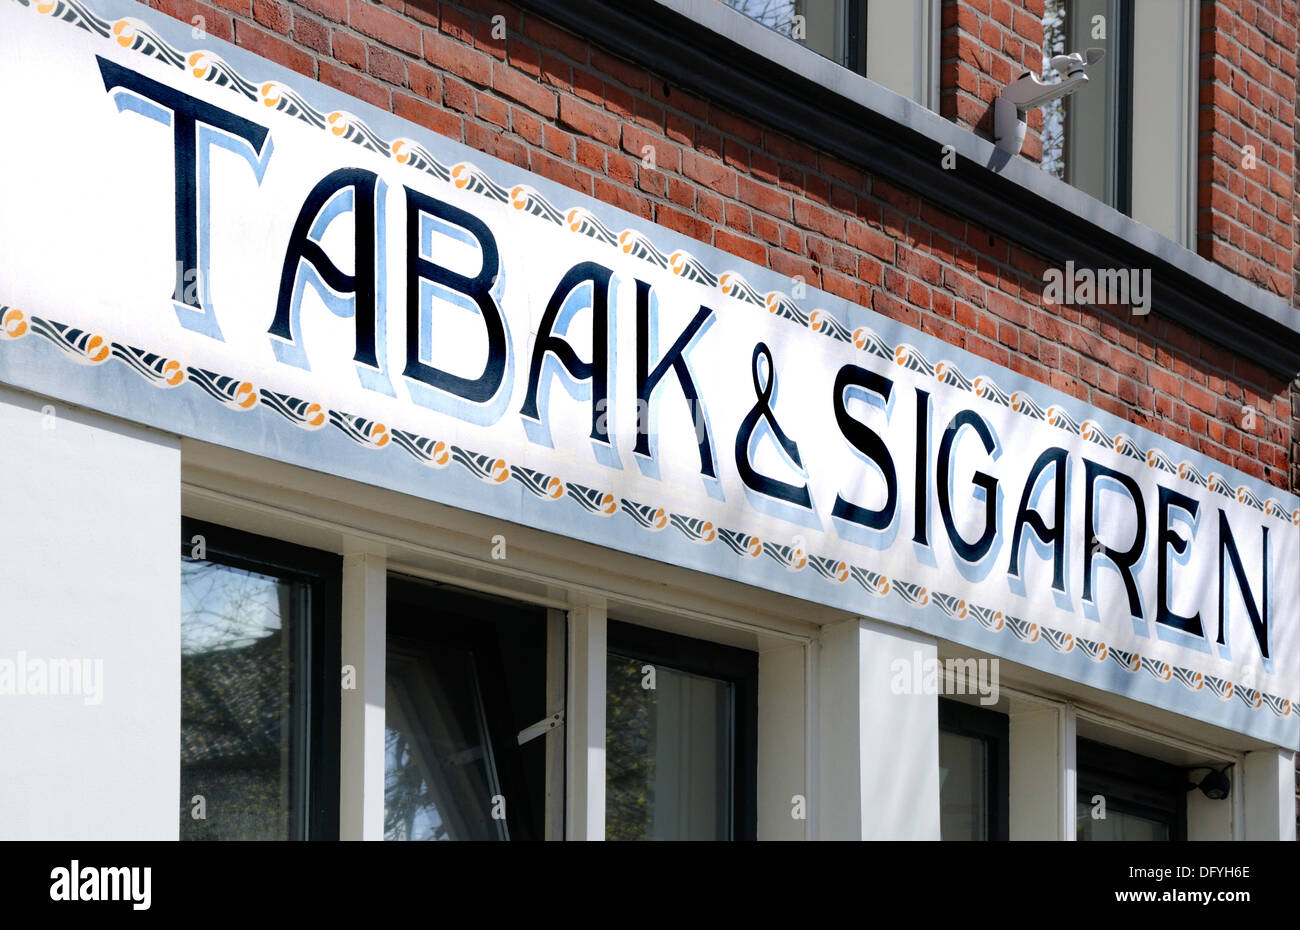 Utrecht, Netherlands. Shop sign - Tabak & Sigaren / Tobacco and Cigars Stock Photo